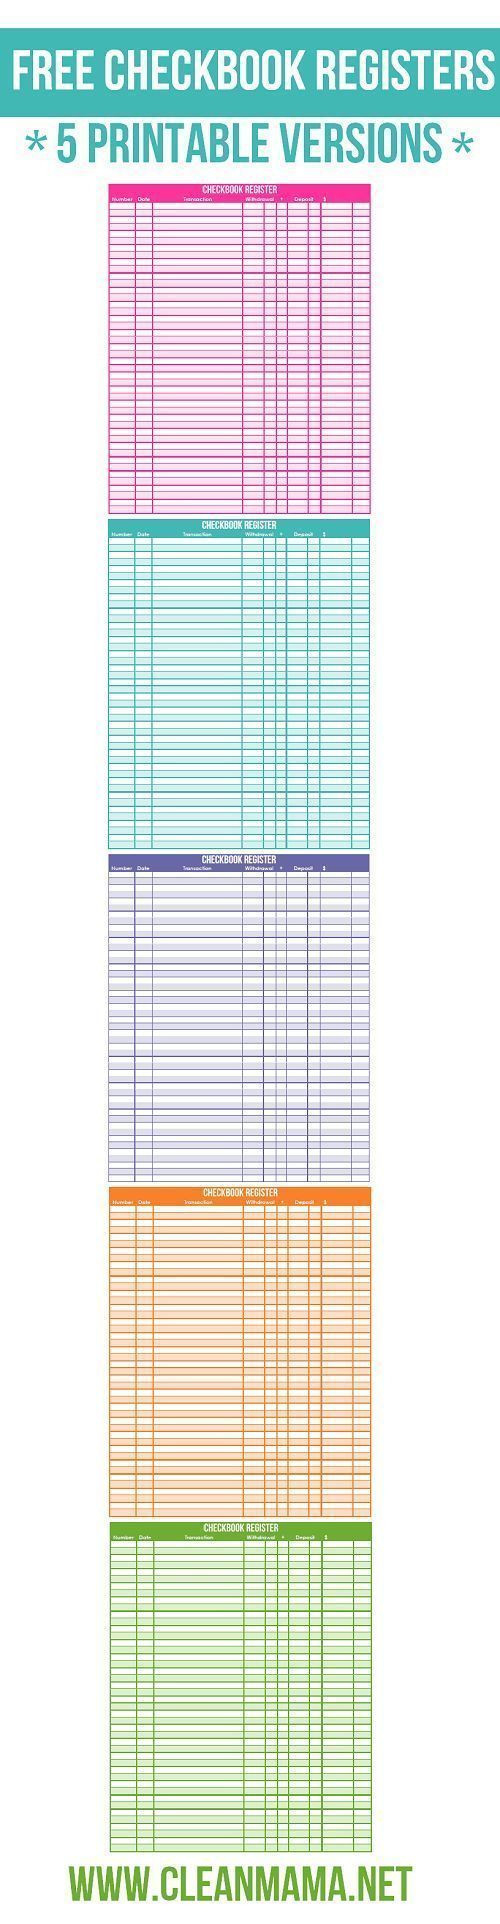 Free Checkbook Registers - 5 Printable Versions  Small Printable Calendar Check Register